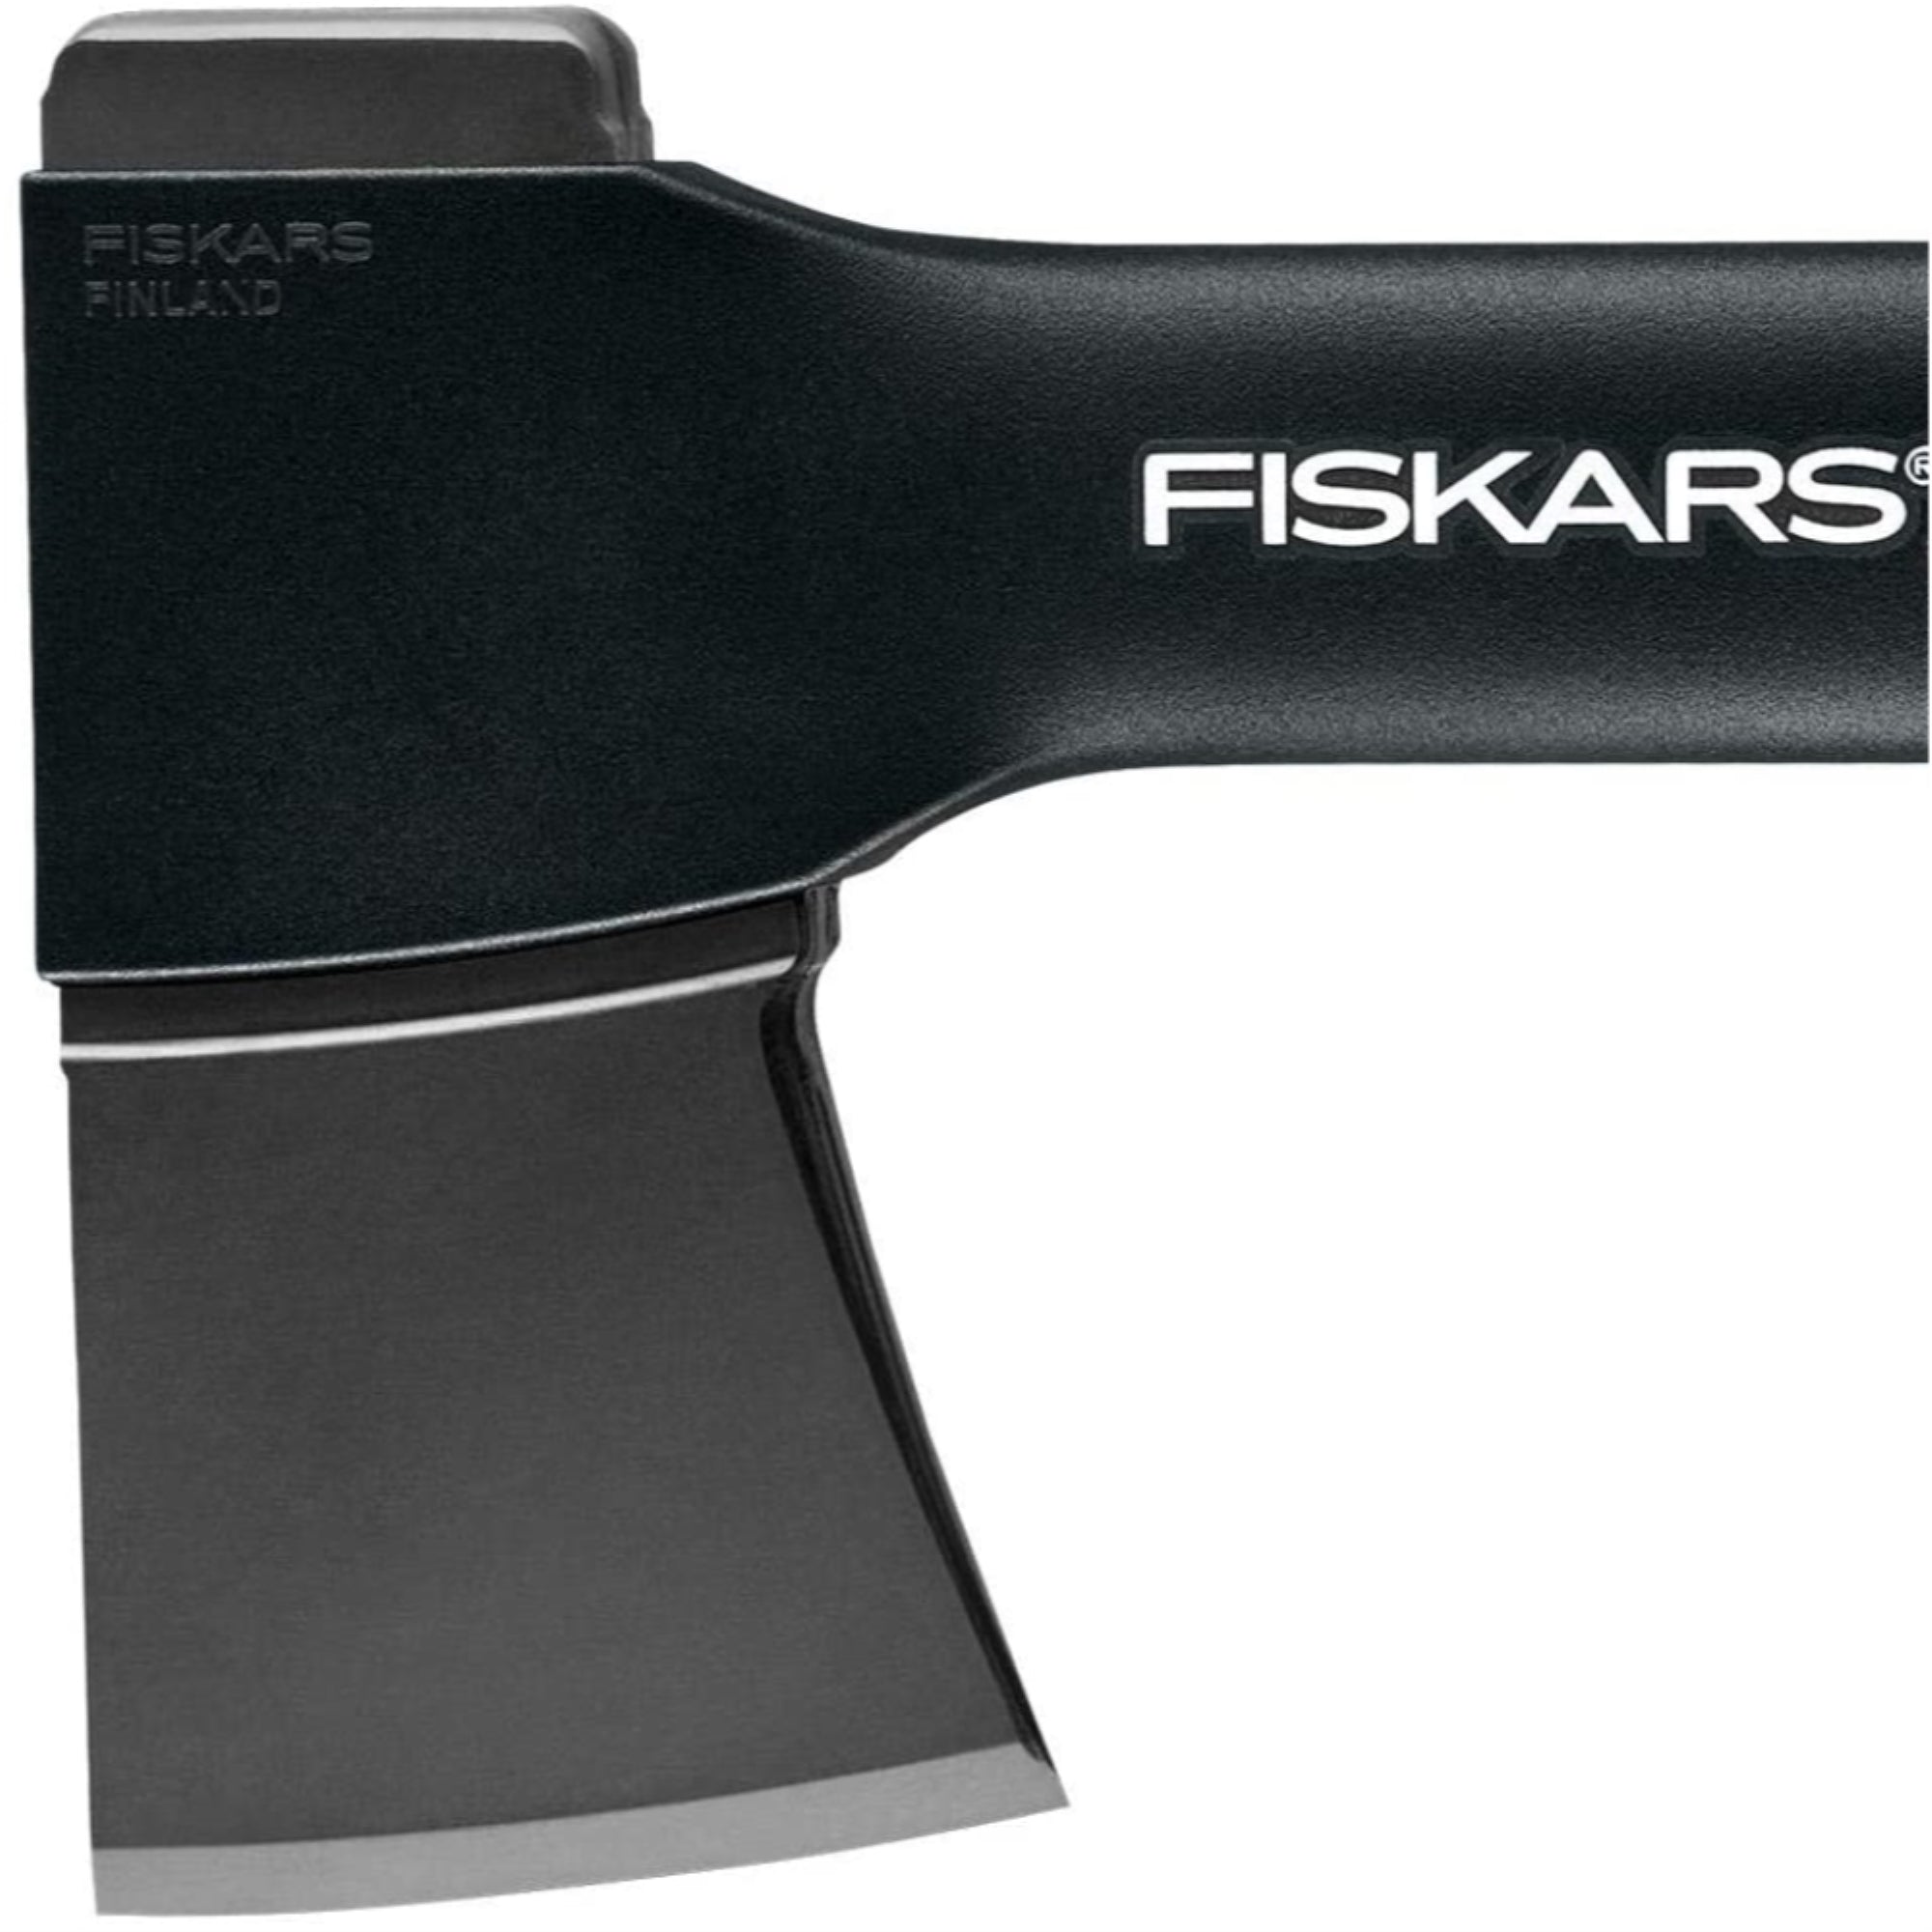 Fiskars Brands Hatchet With Sheath, 14-In.